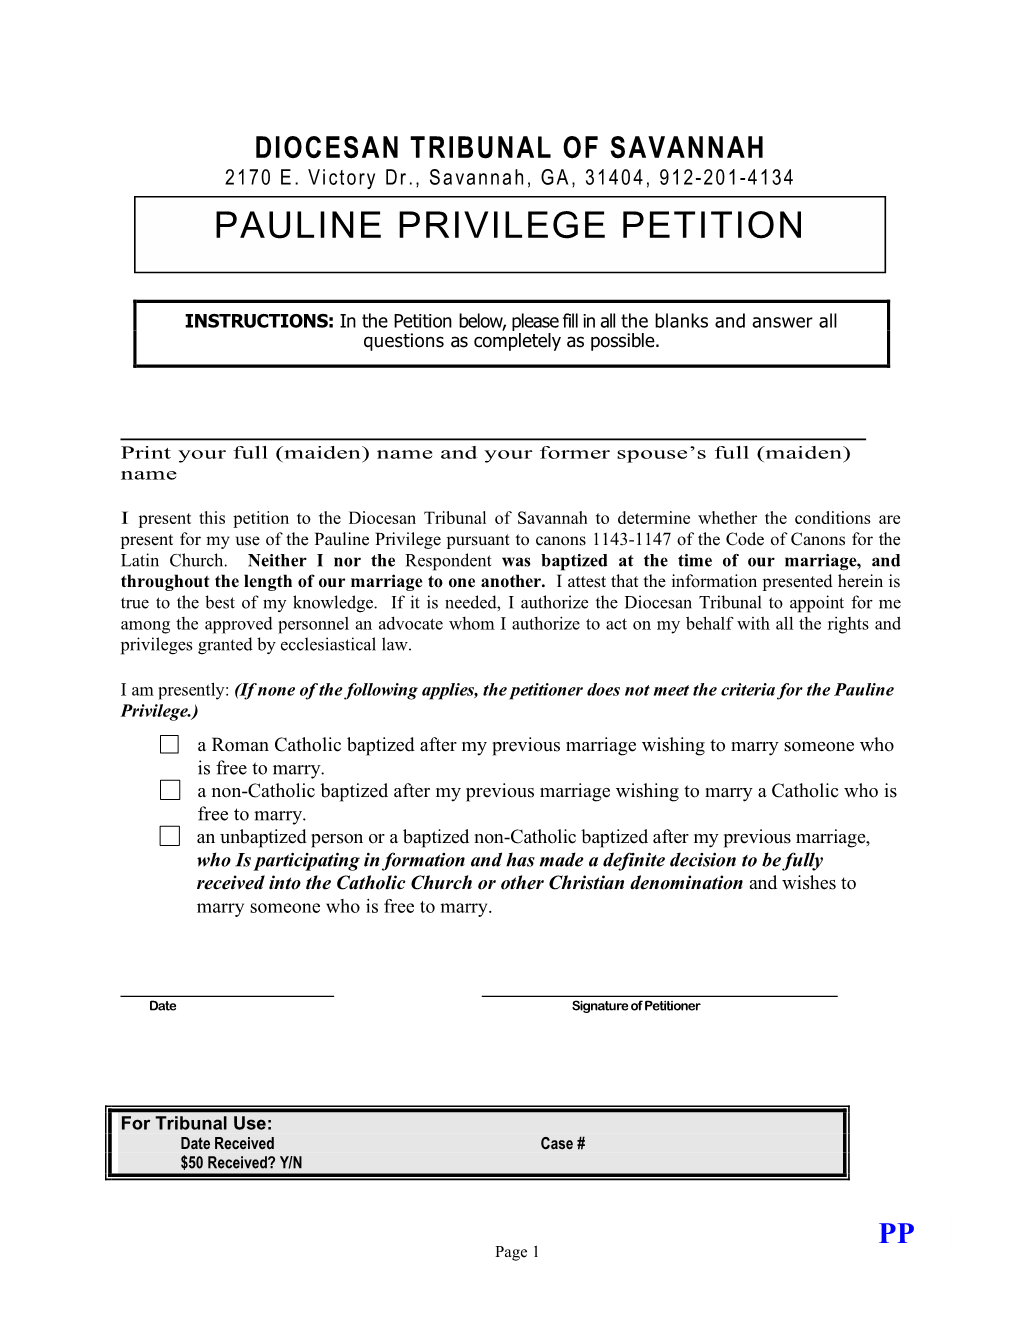 Pauline Privilege Petition